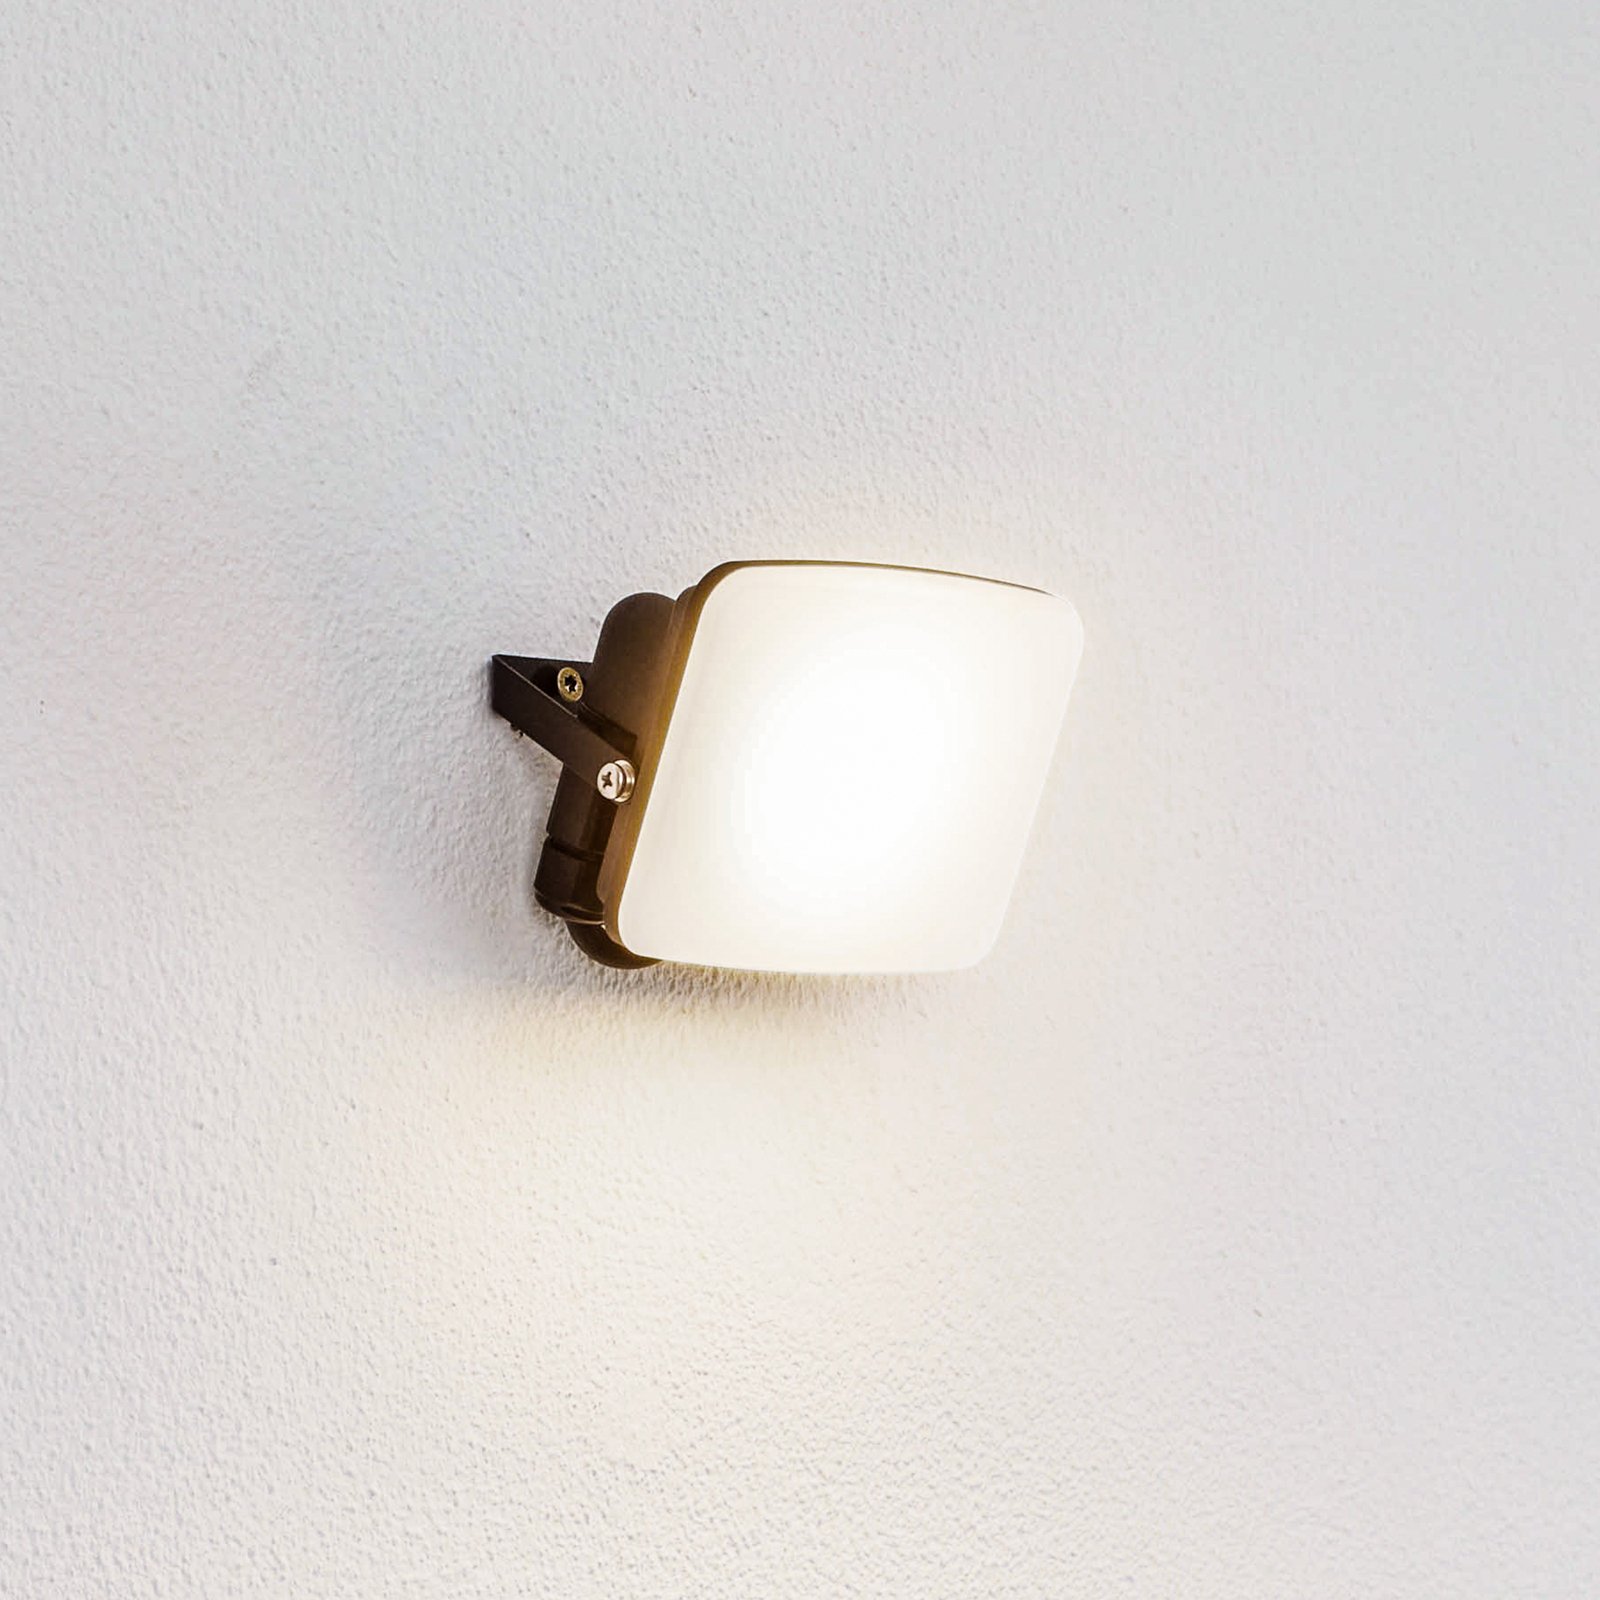 Prios Kaison aplique LED exterior, anchura 11,9 cm